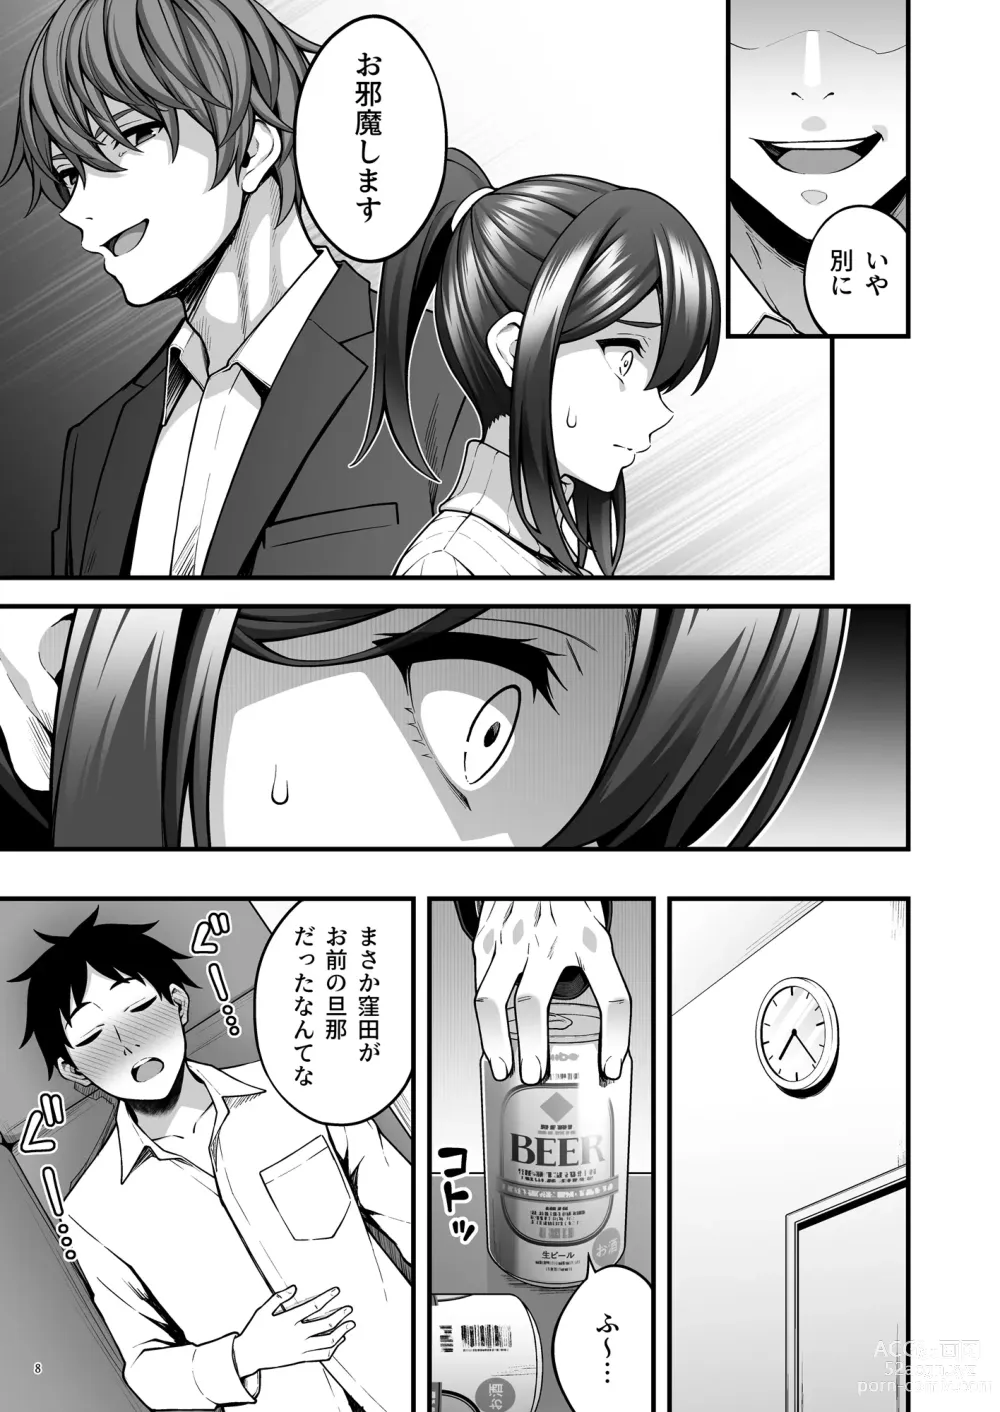 Page 9 of doujinshi 例え人妻になっても、躾けられた身体は快楽を忘れられない。